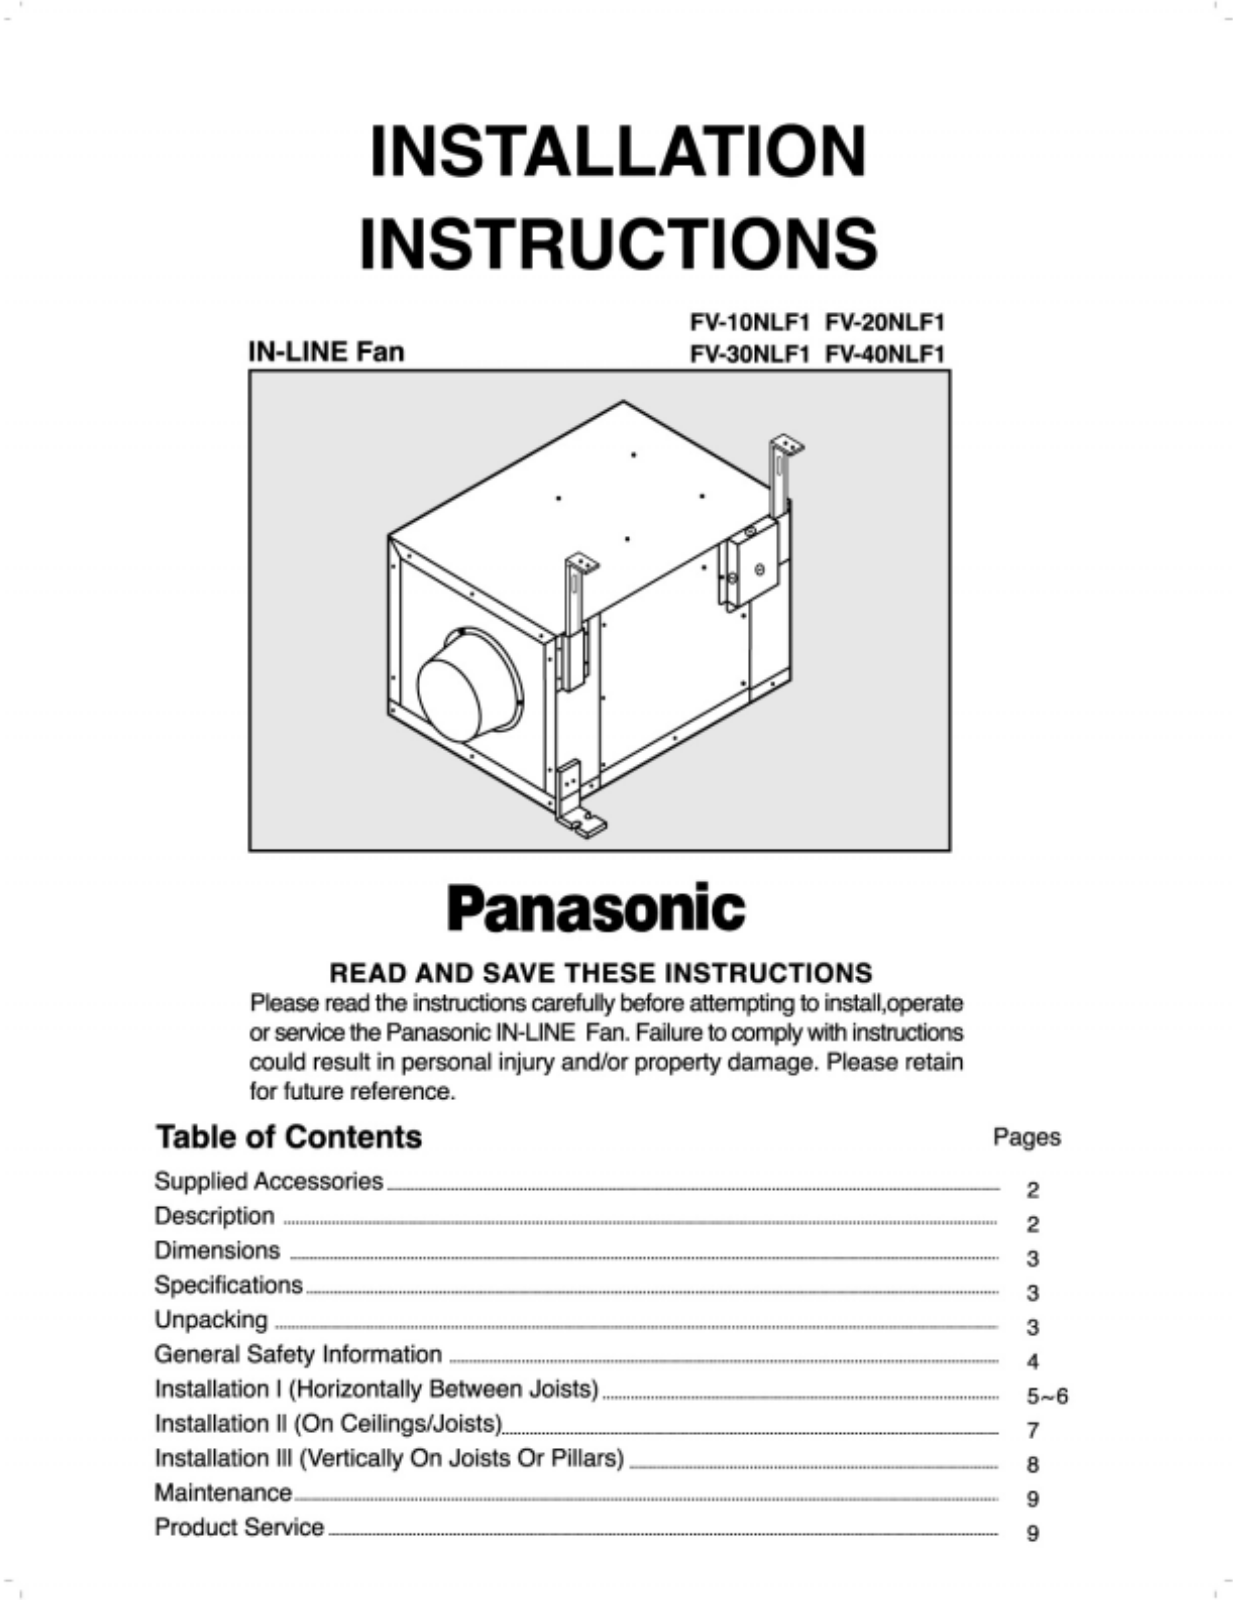 Panasonic fv-xxnlf1 Operation Manual